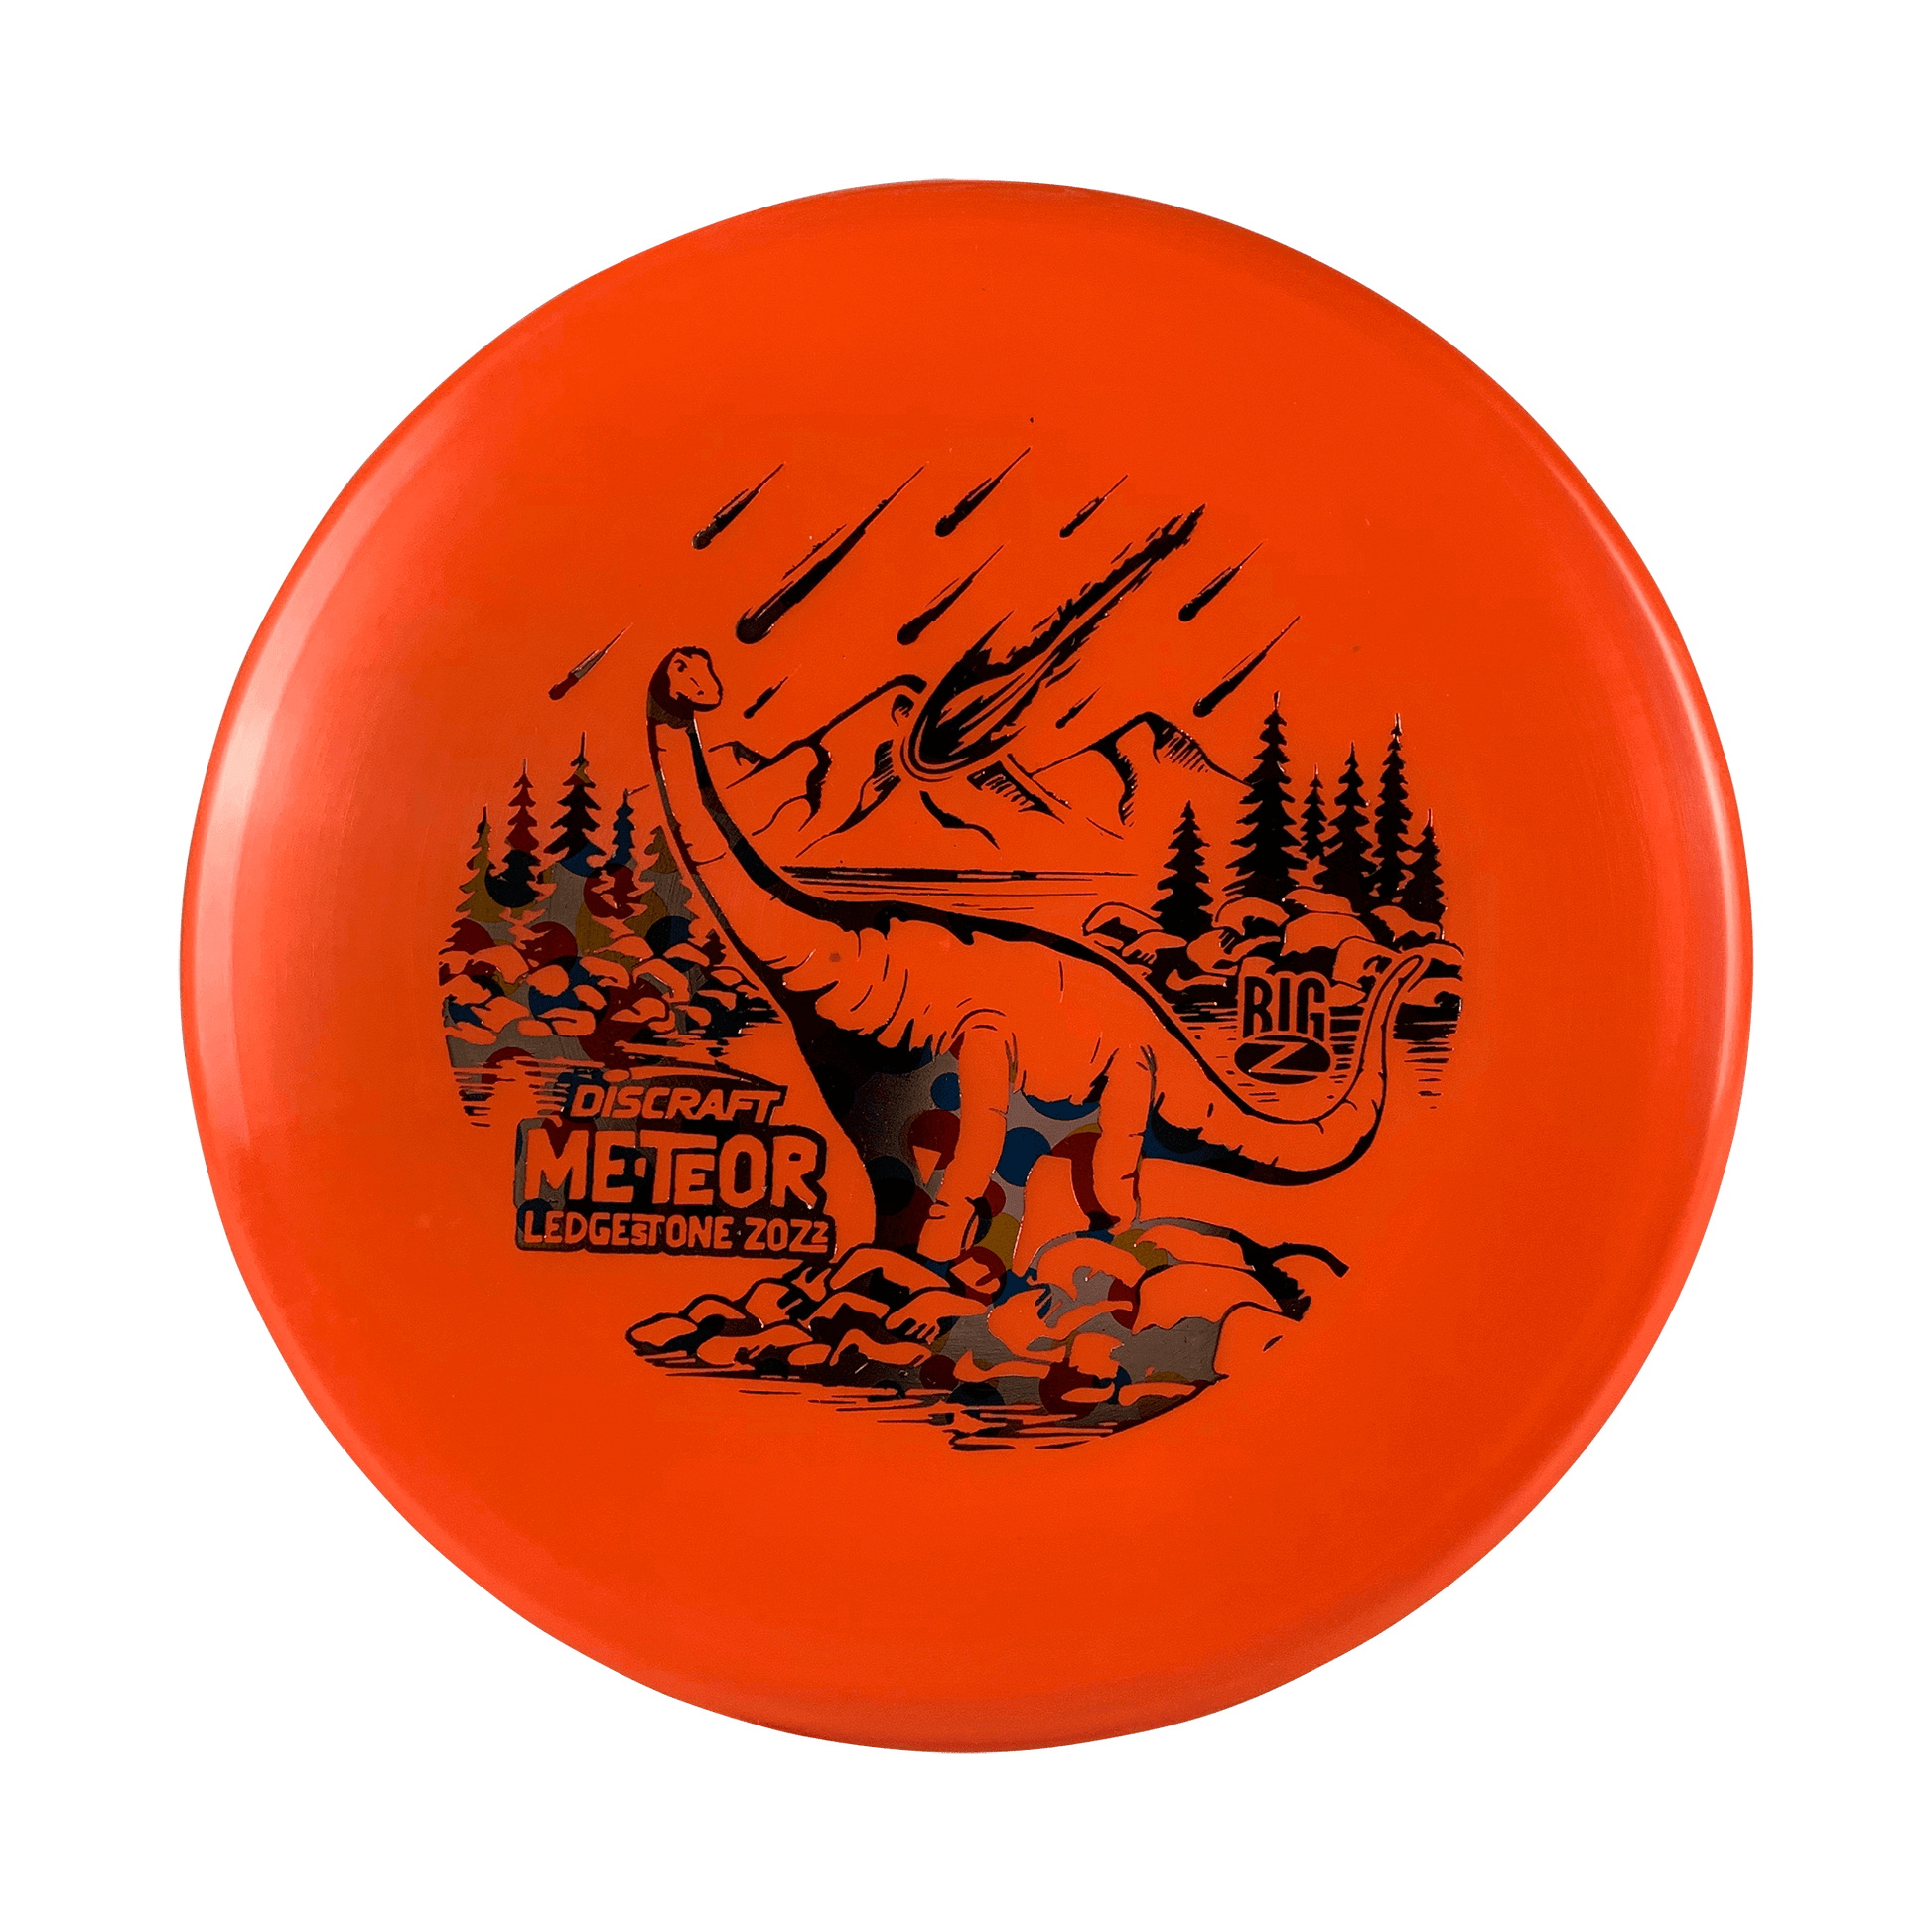 Big Z Meteor - Ledgestone Disc Discraft orange 177 